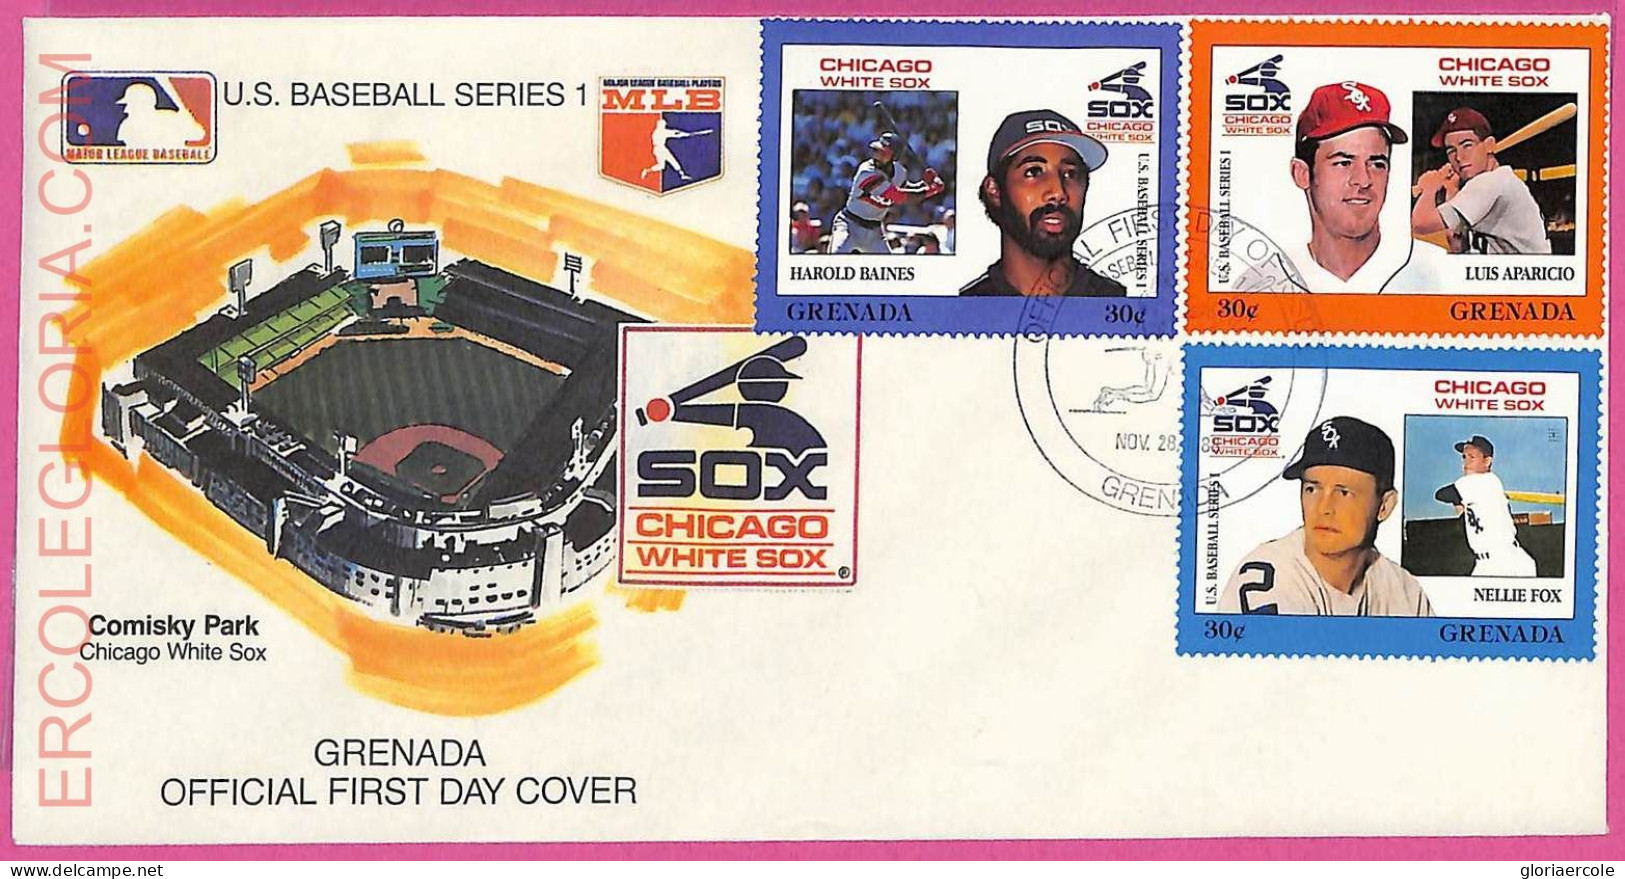 Ag1589 - GRENADA - Postal History - FDC COVER - 1988 BASEBALL - Baseball